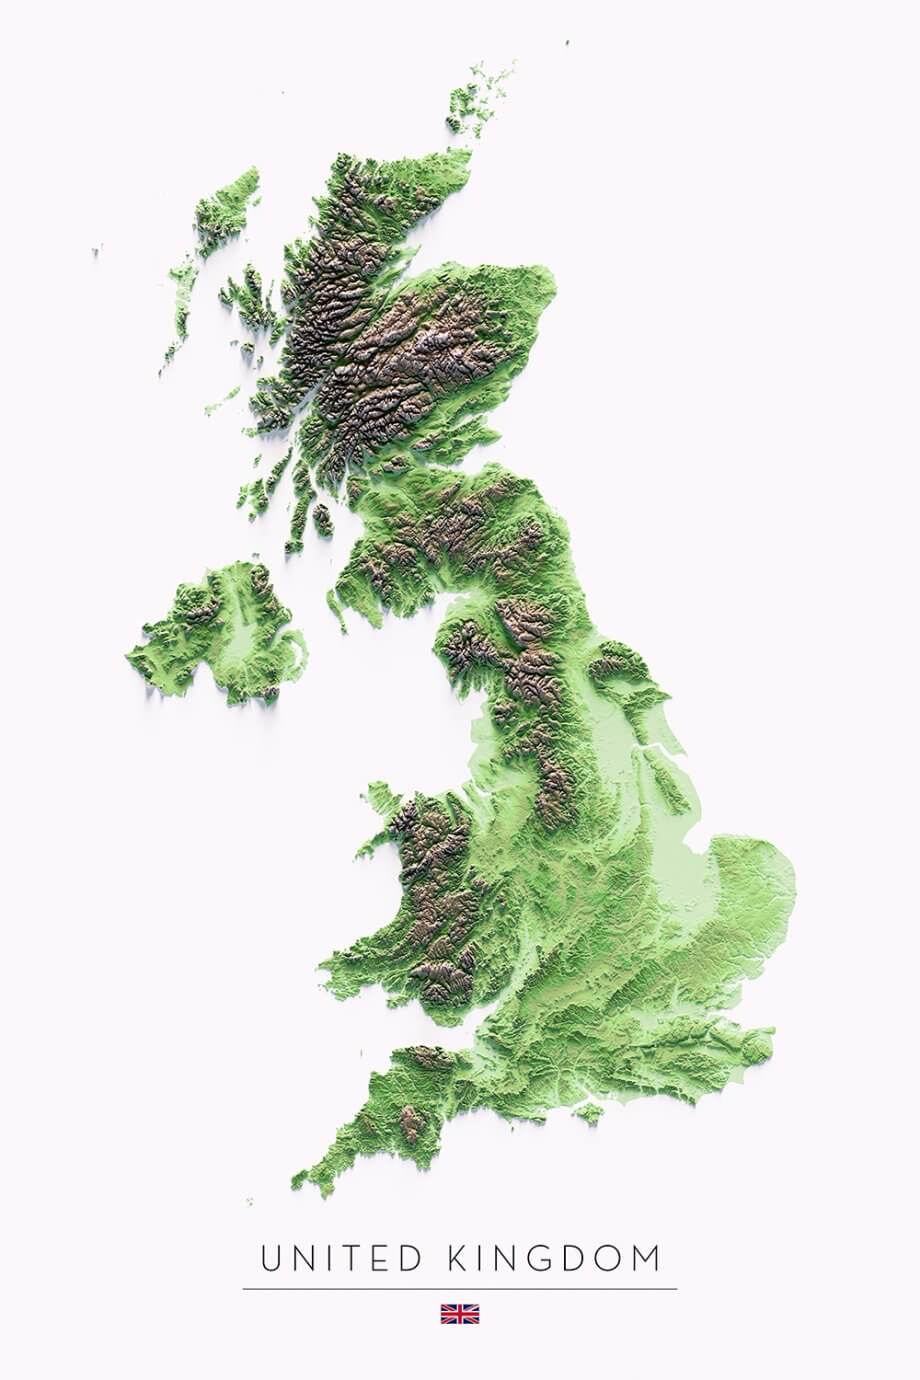 trobart maps digital art - map of the united kingdom